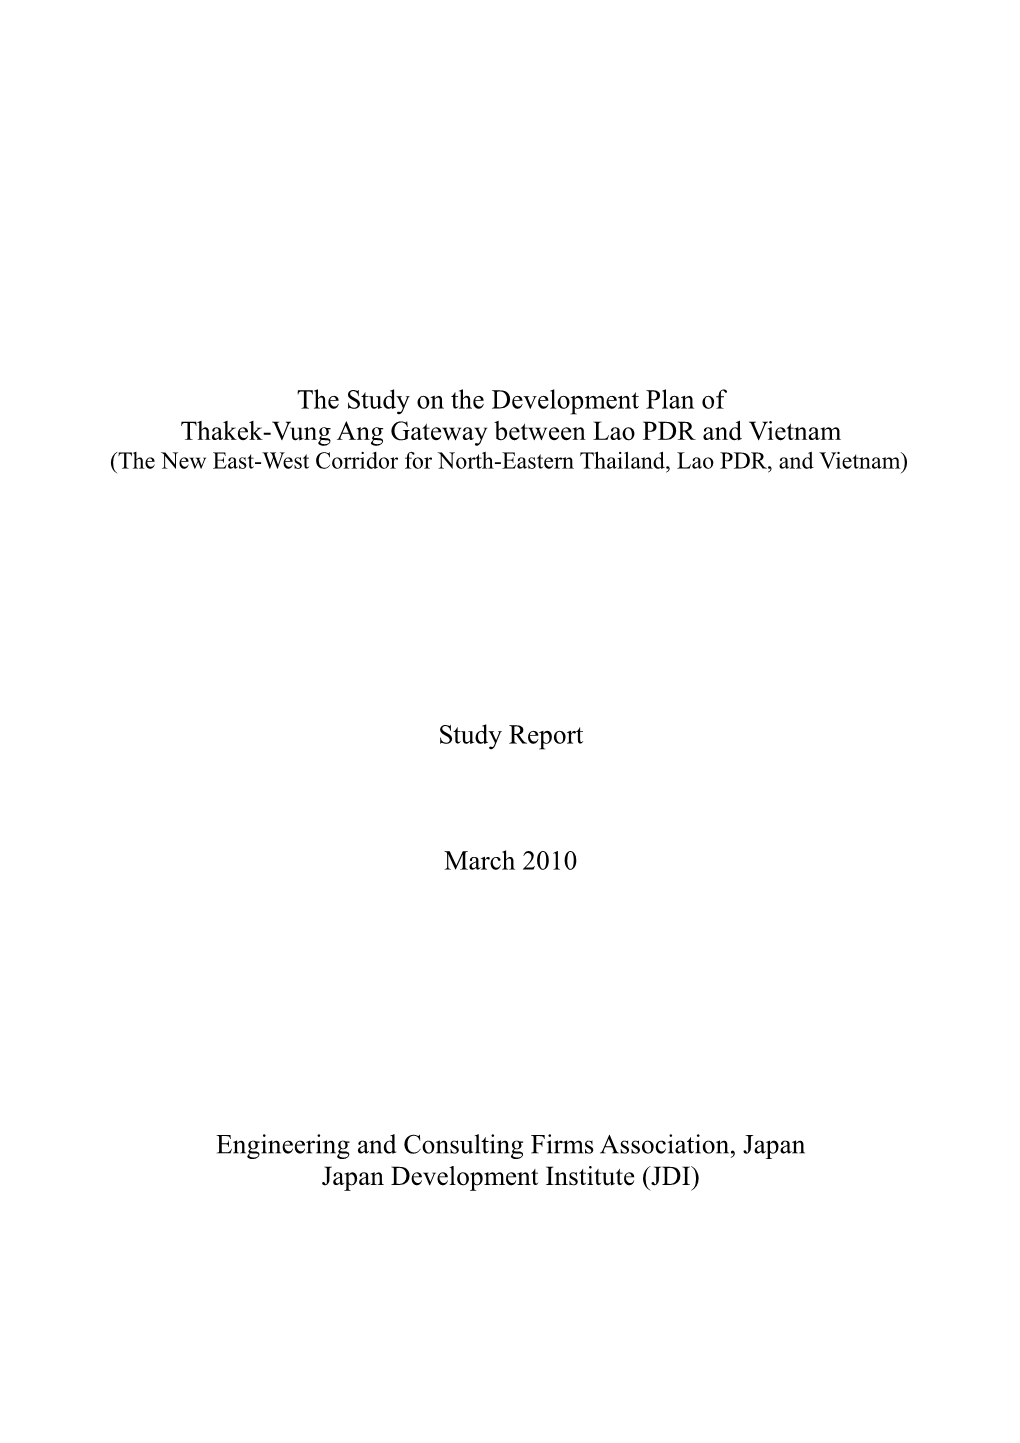 The Study on the Development Plan of Thakek-Vung Ang Gateway